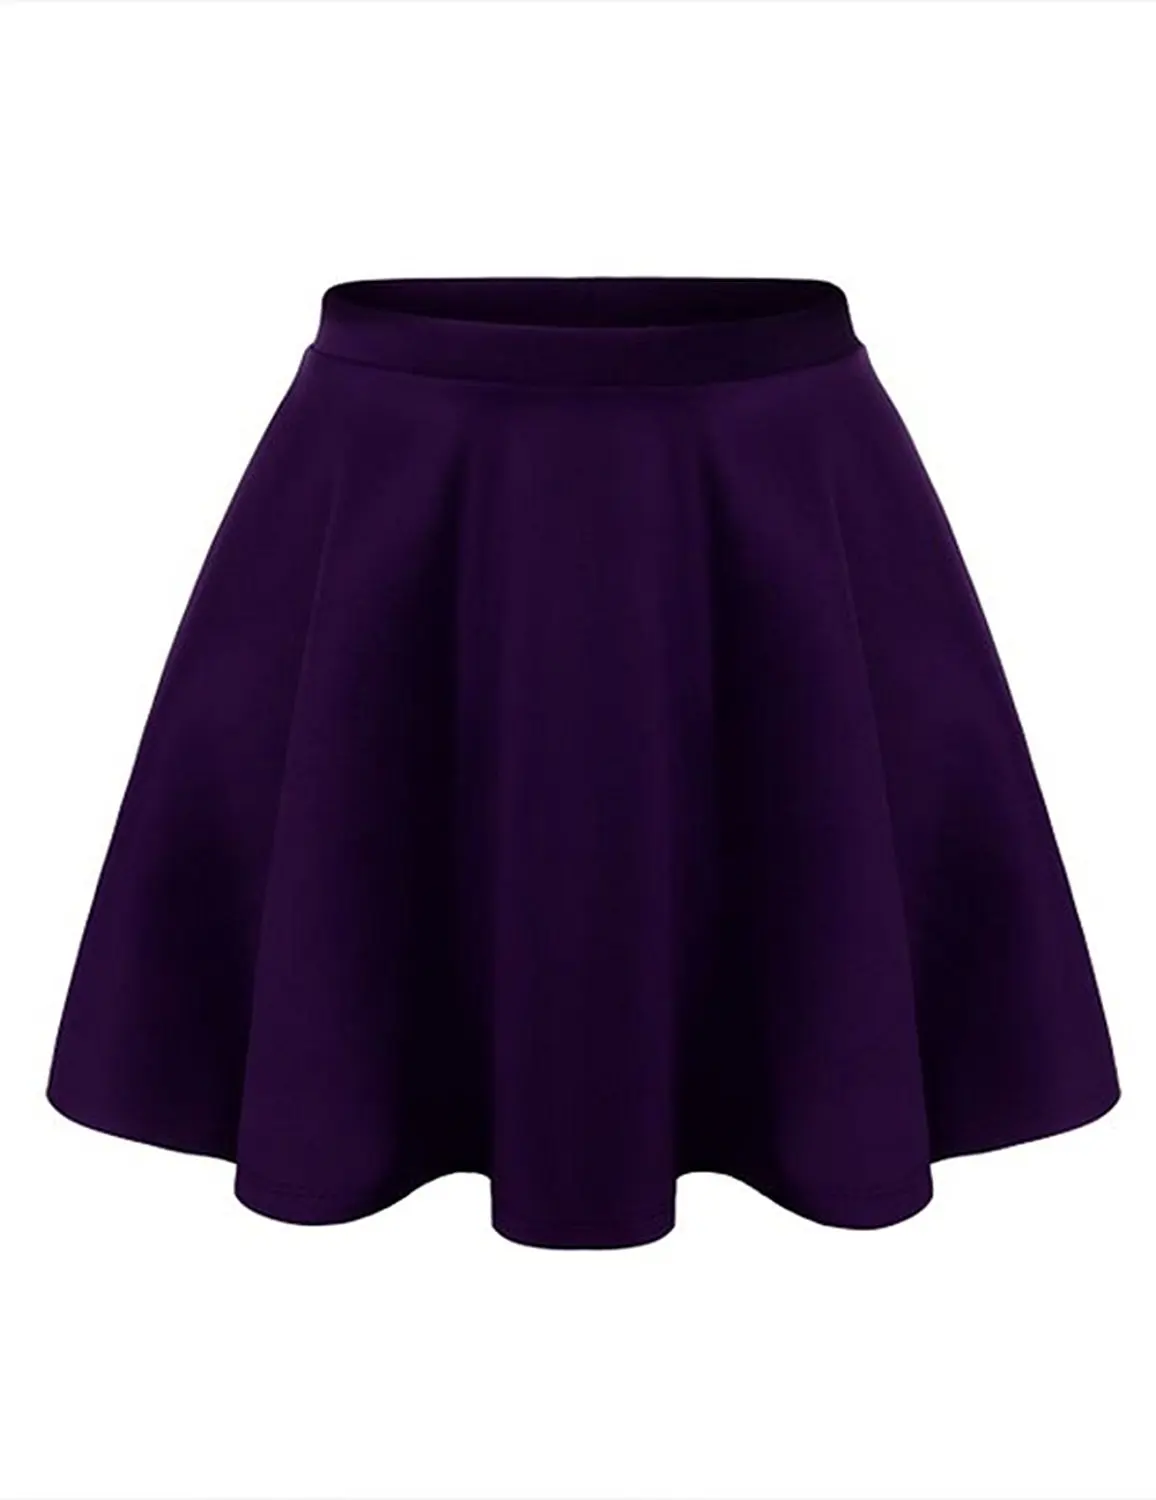 Cheap Womens Purple Skirt, find Womens Purple Skirt deals on line at ...